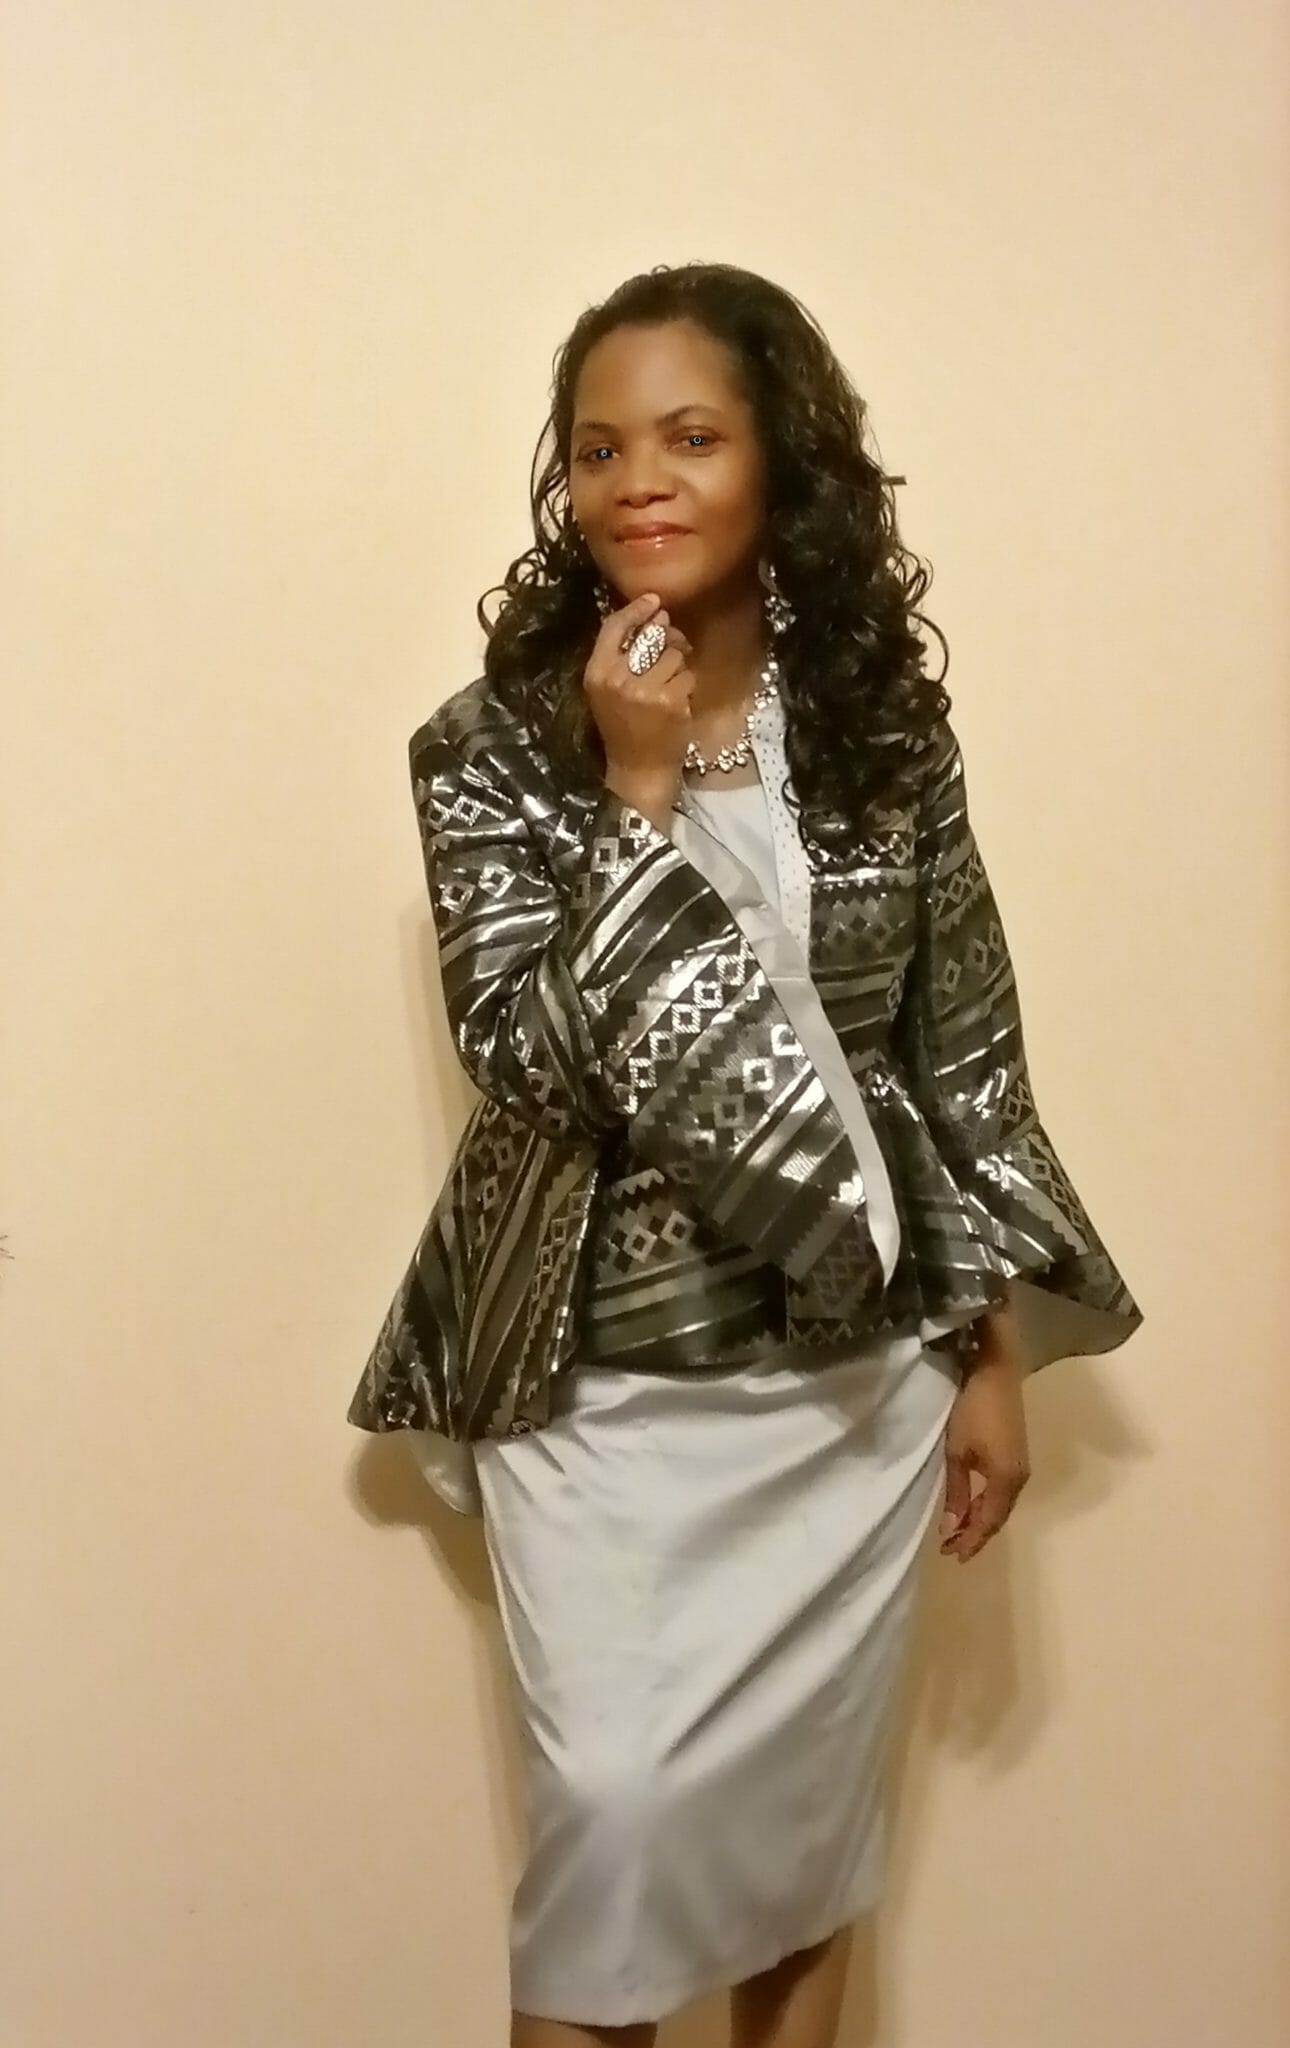 Kimberly (Ashro customer) posing forward in black and silver metallic jacket dress.